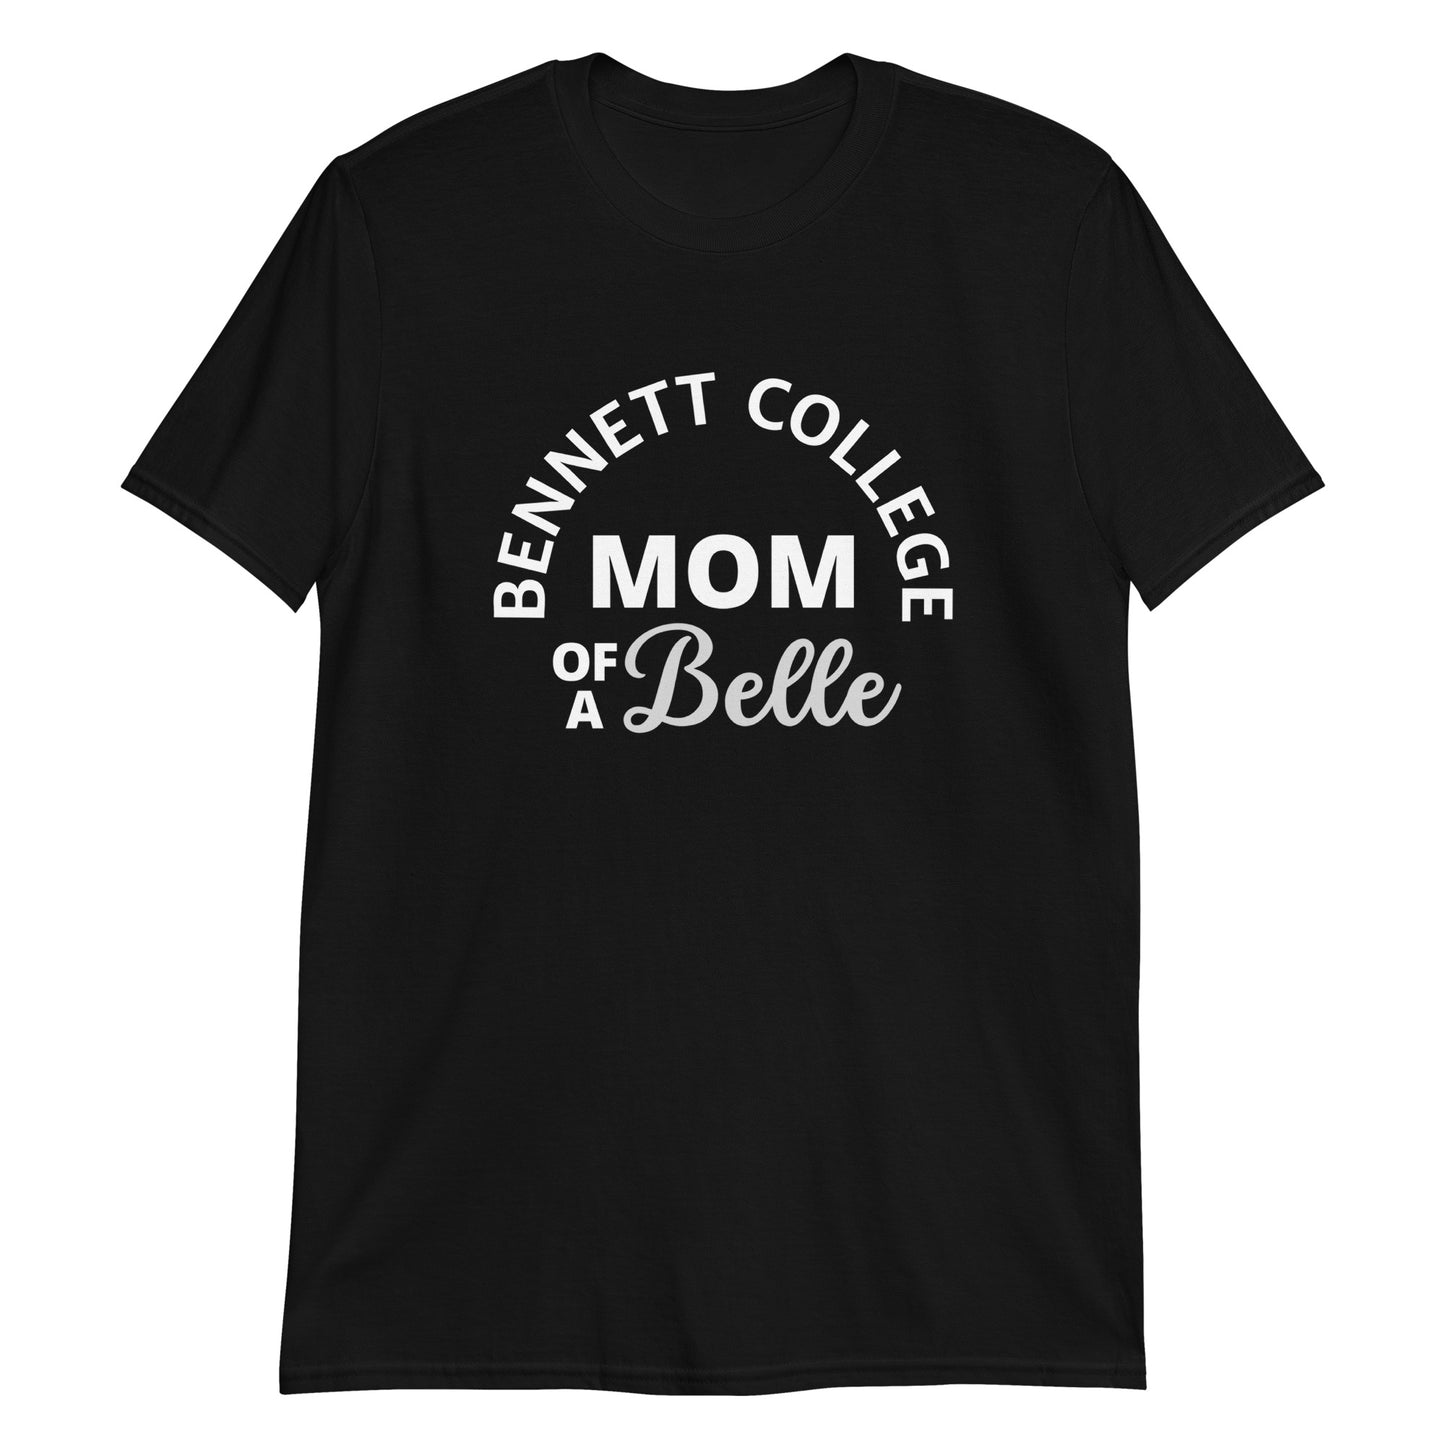 Mom Of A Belle - Short-Sleeve Unisex T-Shirt